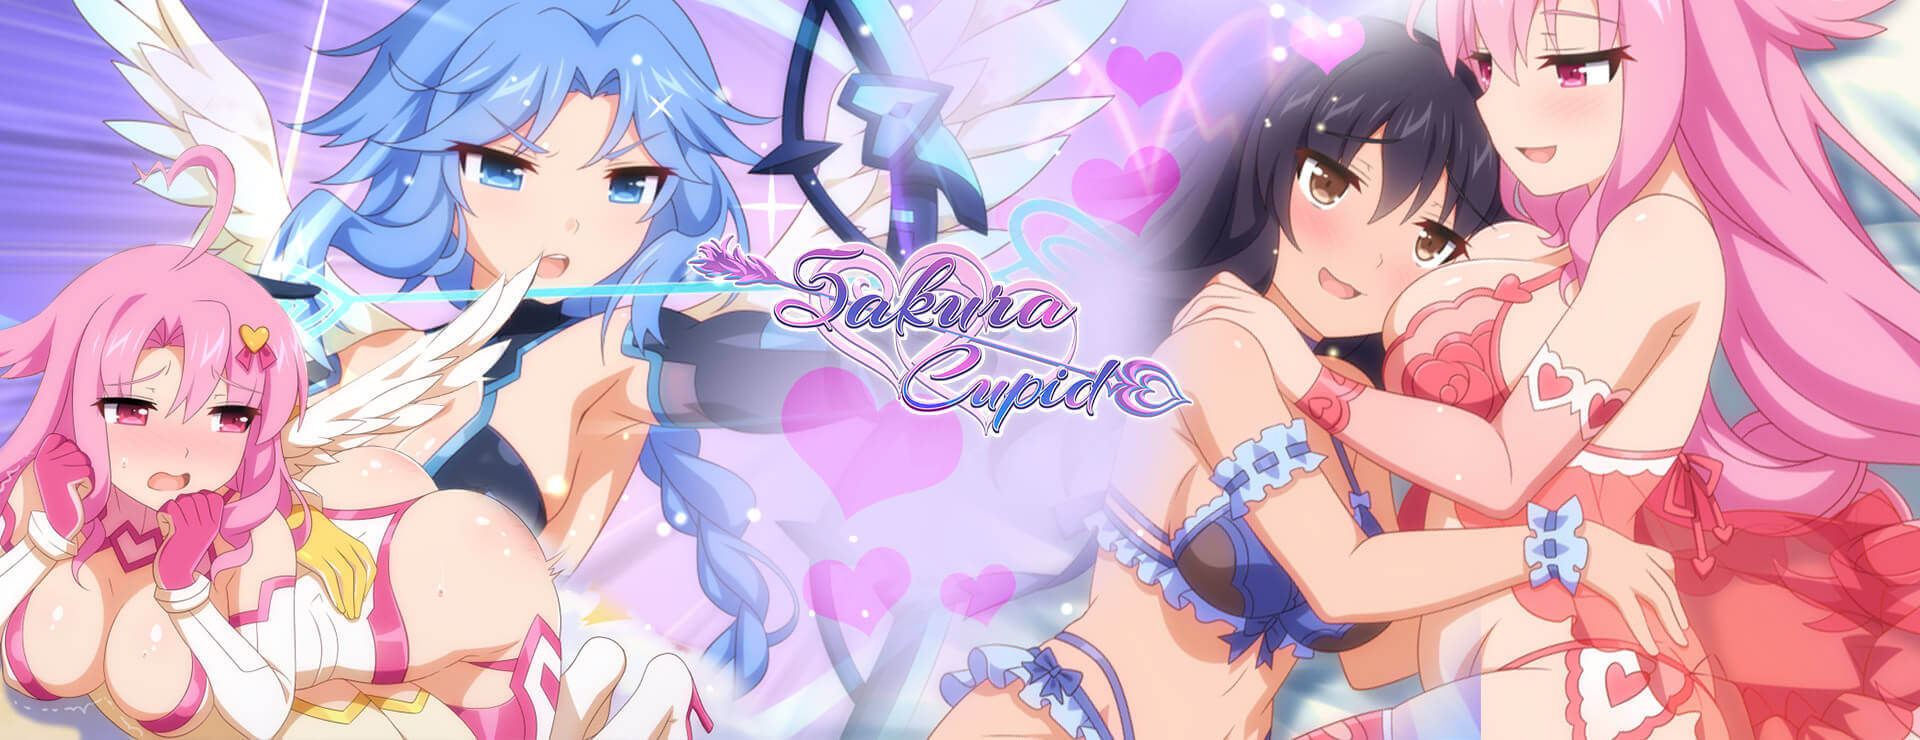 Sakura Cupid - ビジュアルノベル ゲーム